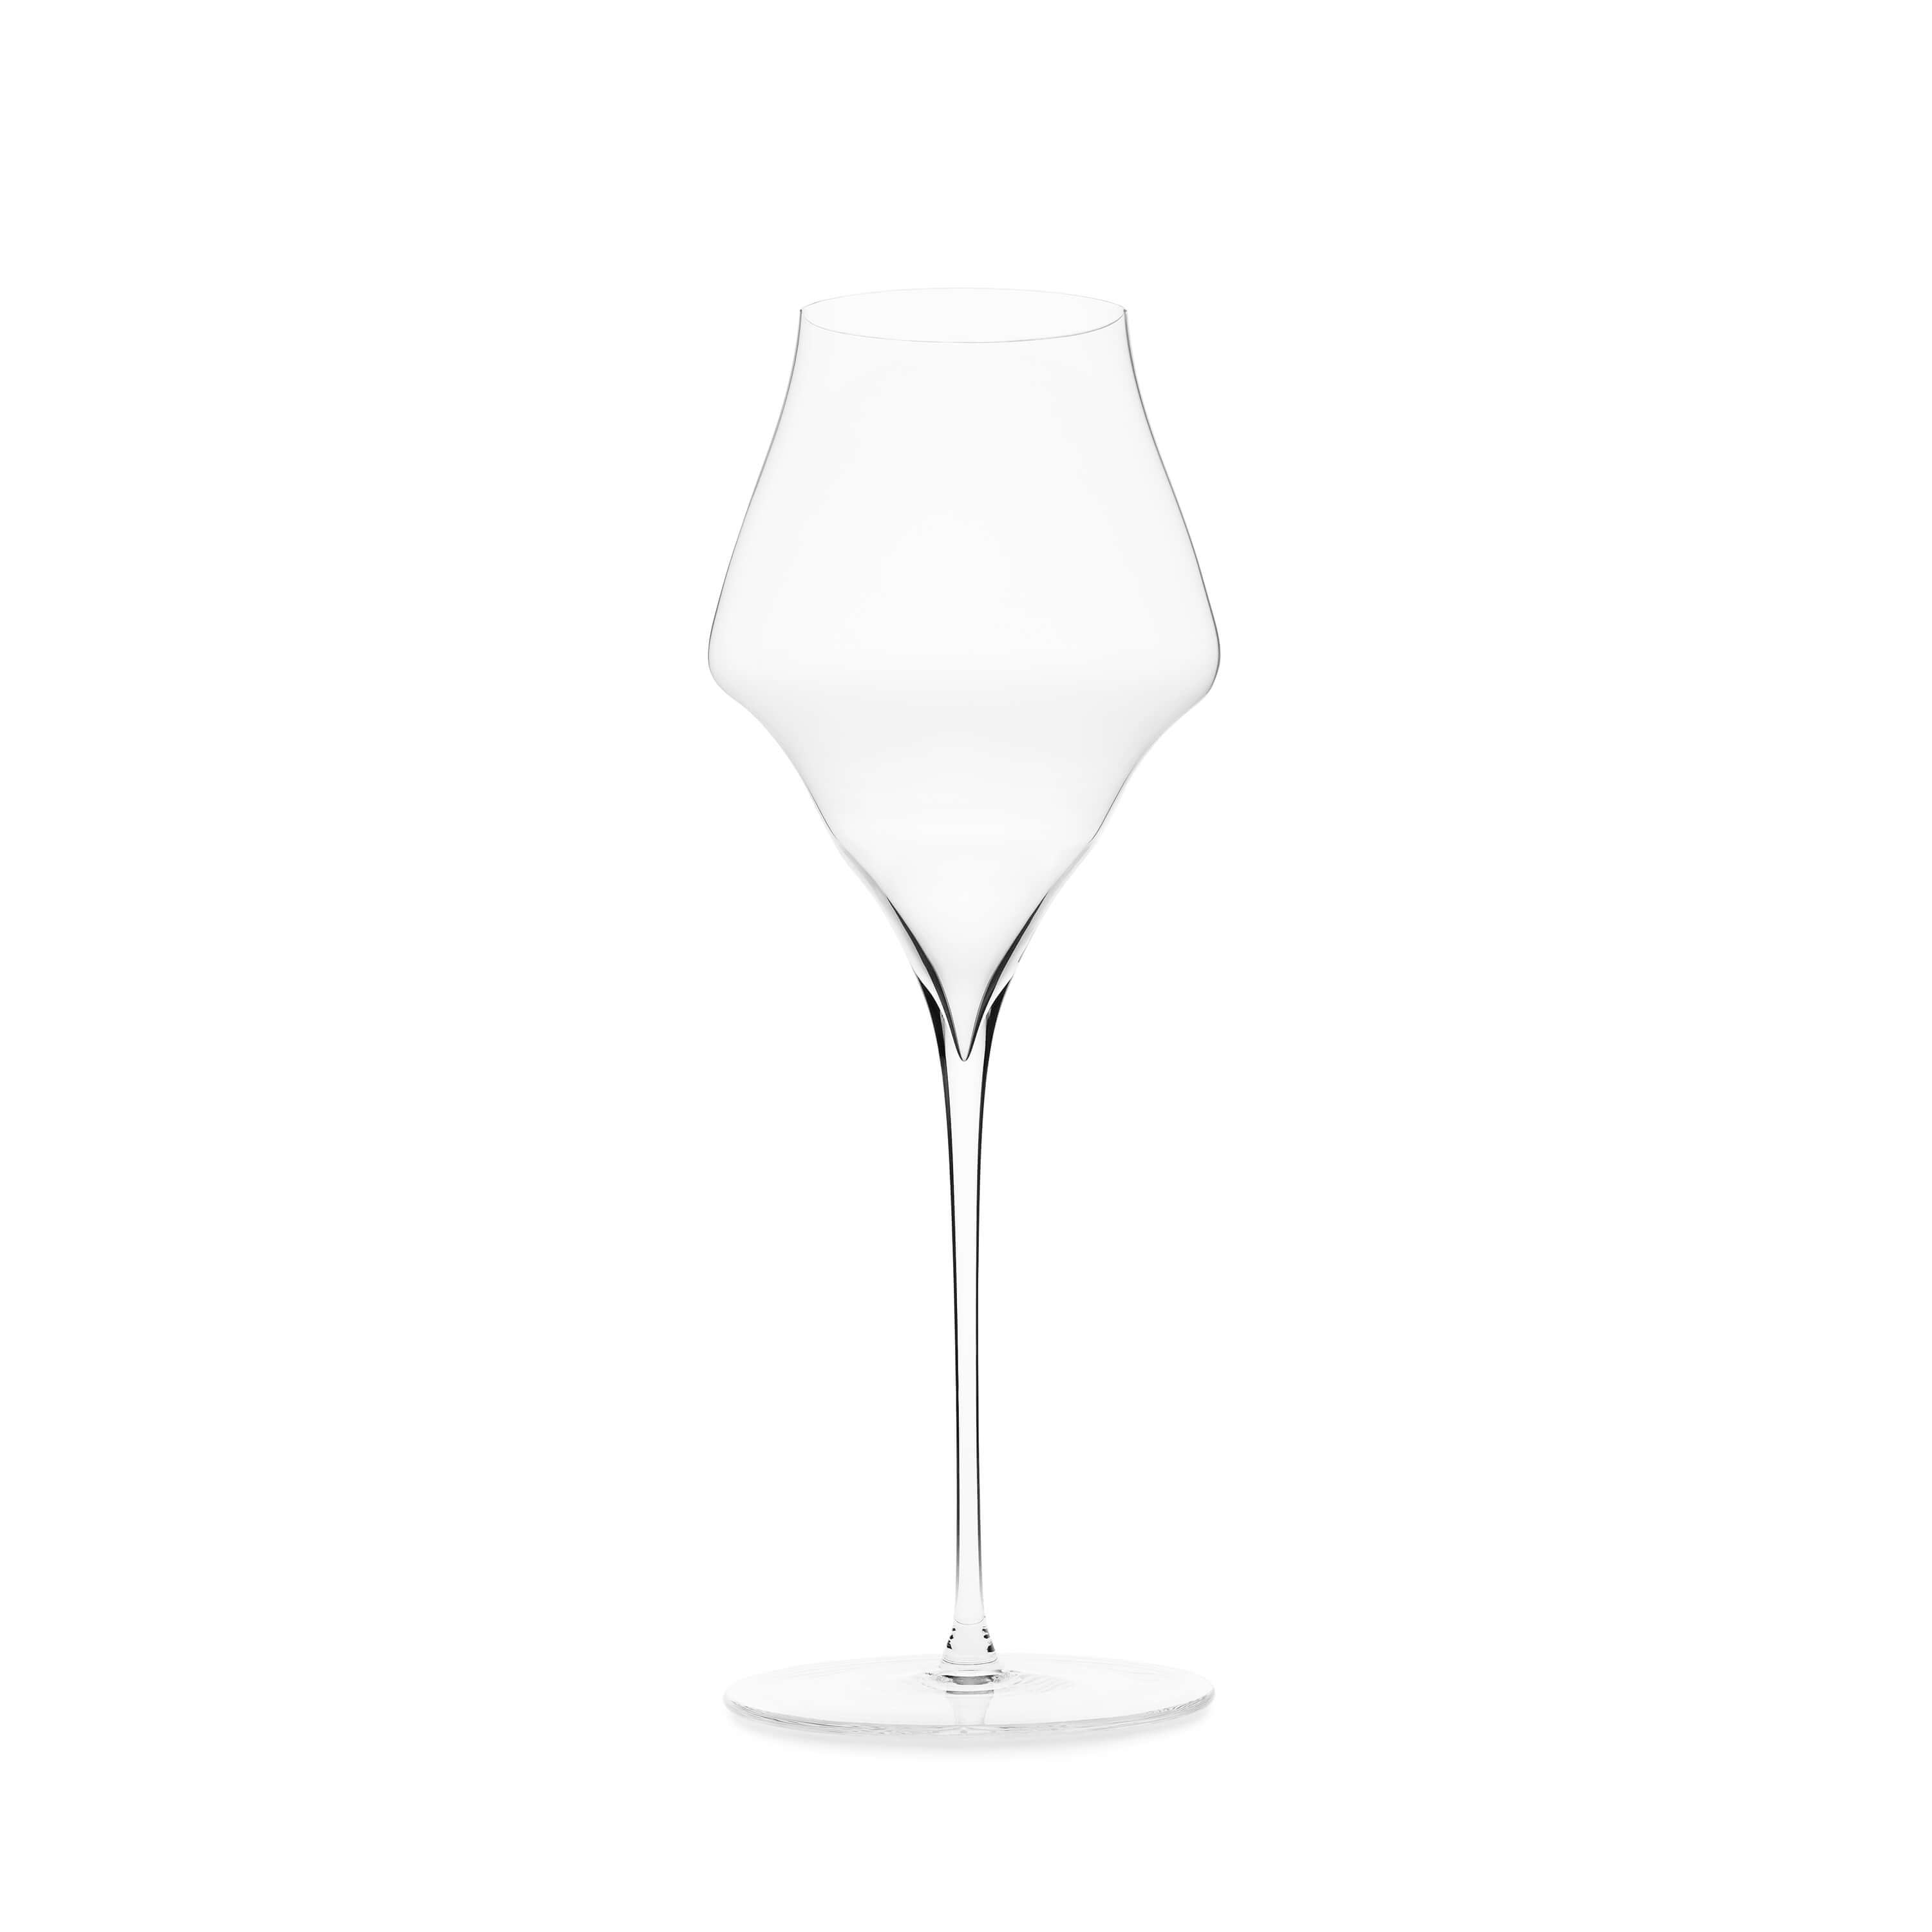 Josephine No. 4 single champagne glass